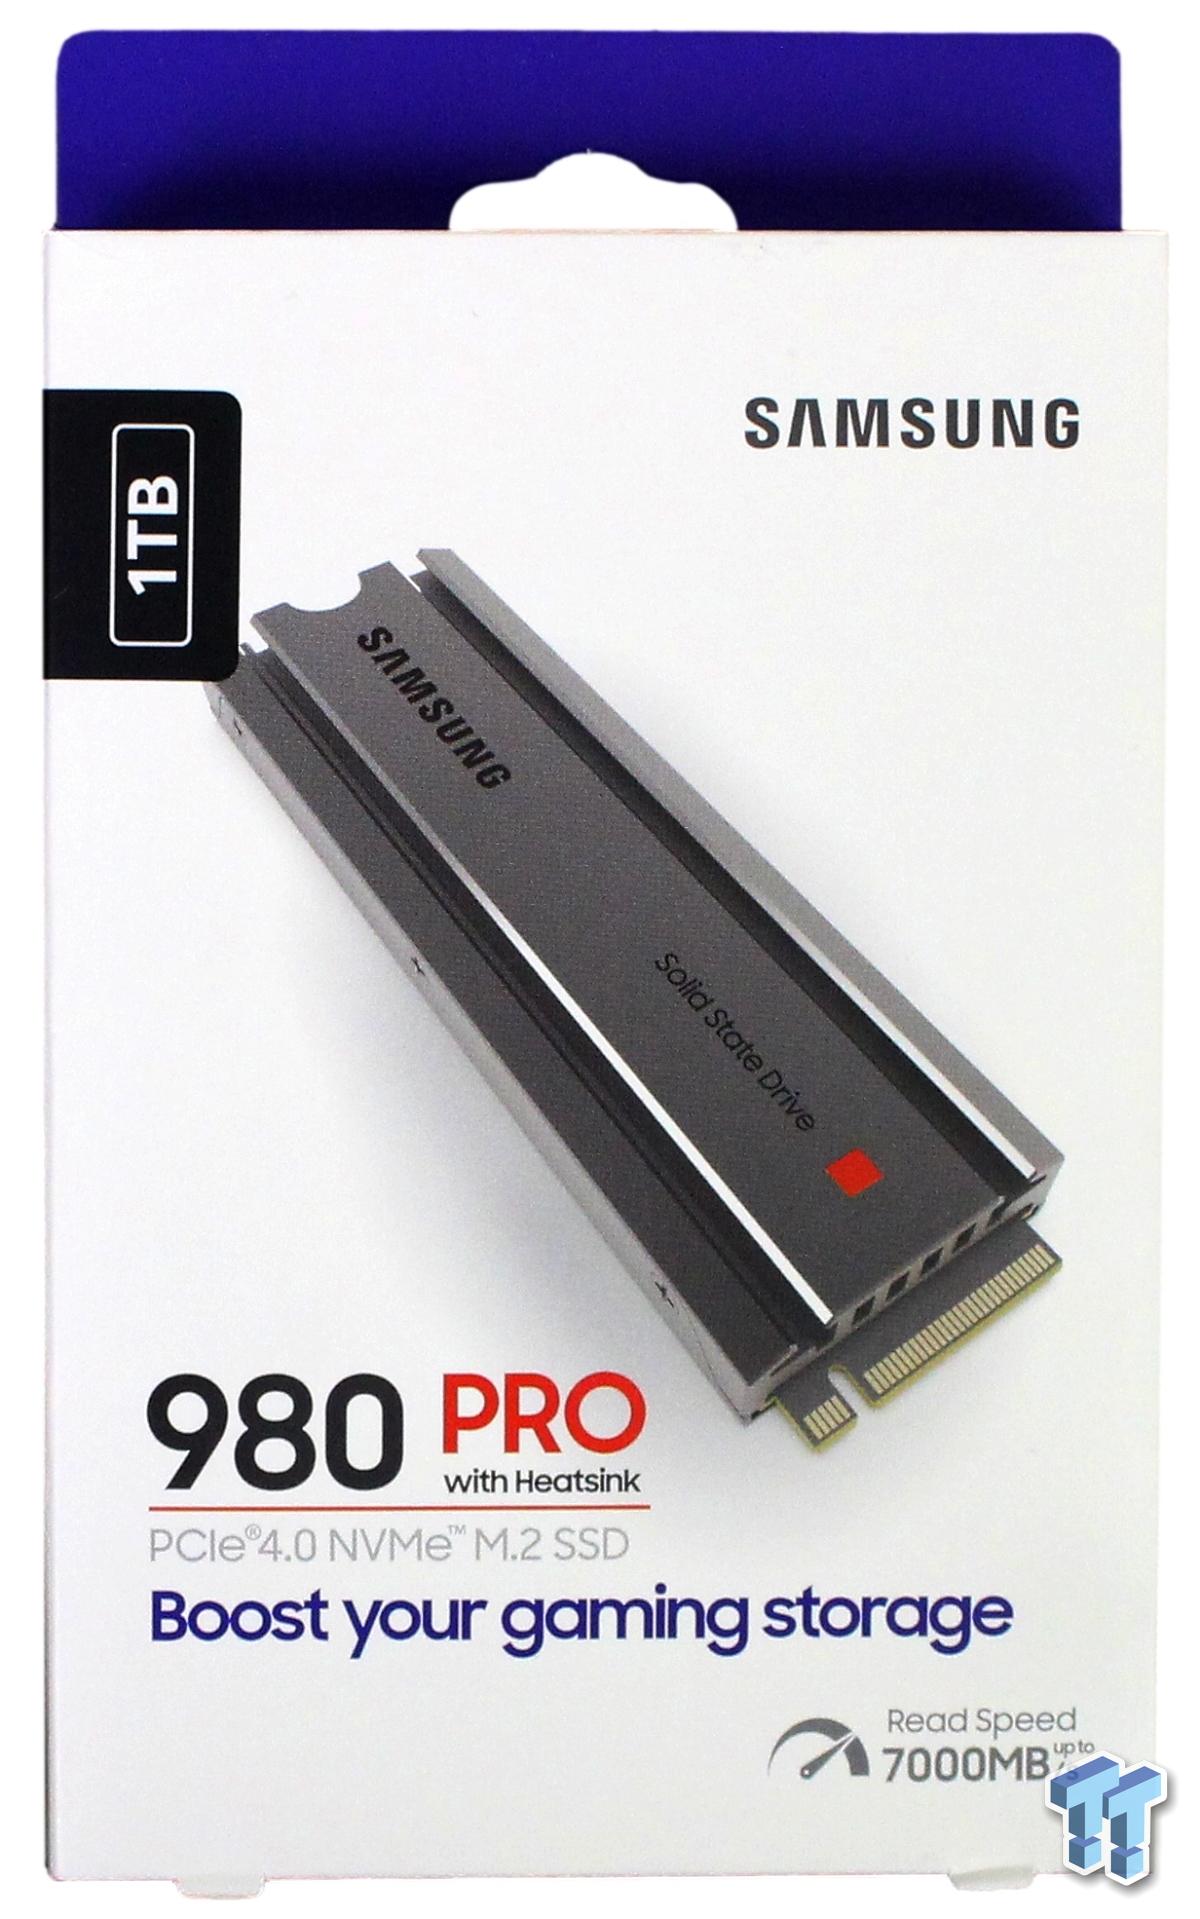 samsung 980 PRO with Heatsink 1TB